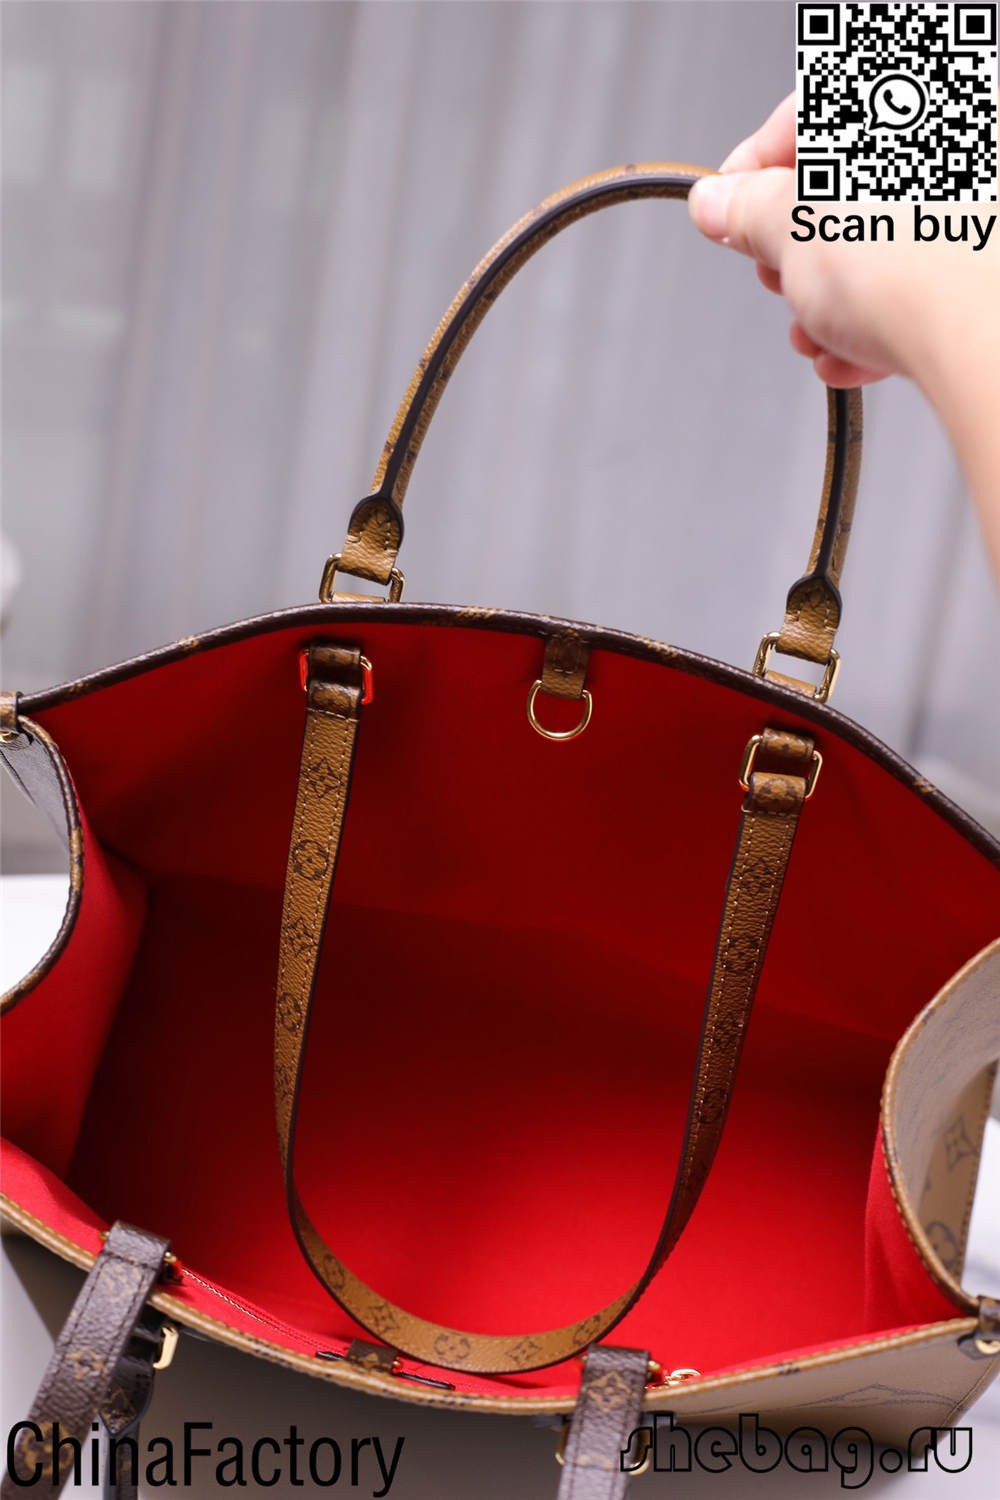 louis vuitton jeff koons replica bag uk (2022 නවතම)-හොඳම ගුණාත්මක ව්‍යාජ Louis Vuitton Bag Online Store, Replica designer bag ru මිලදී ගන්න